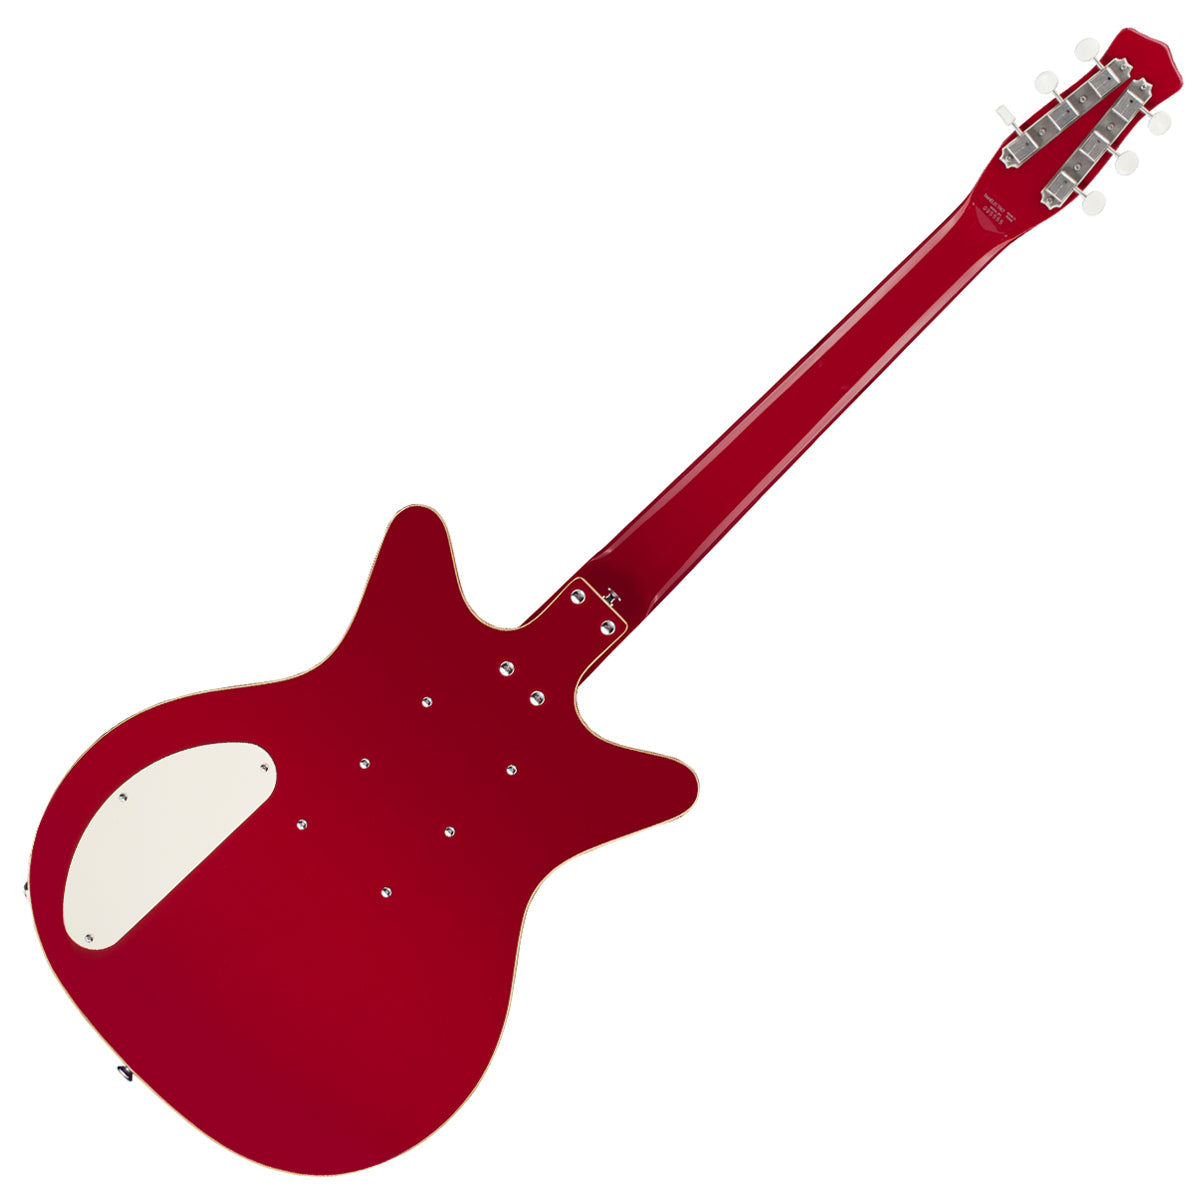 Danelectro Triple Divine Guitar ~ Red, Electric Guitar for sale at Richards Guitars.